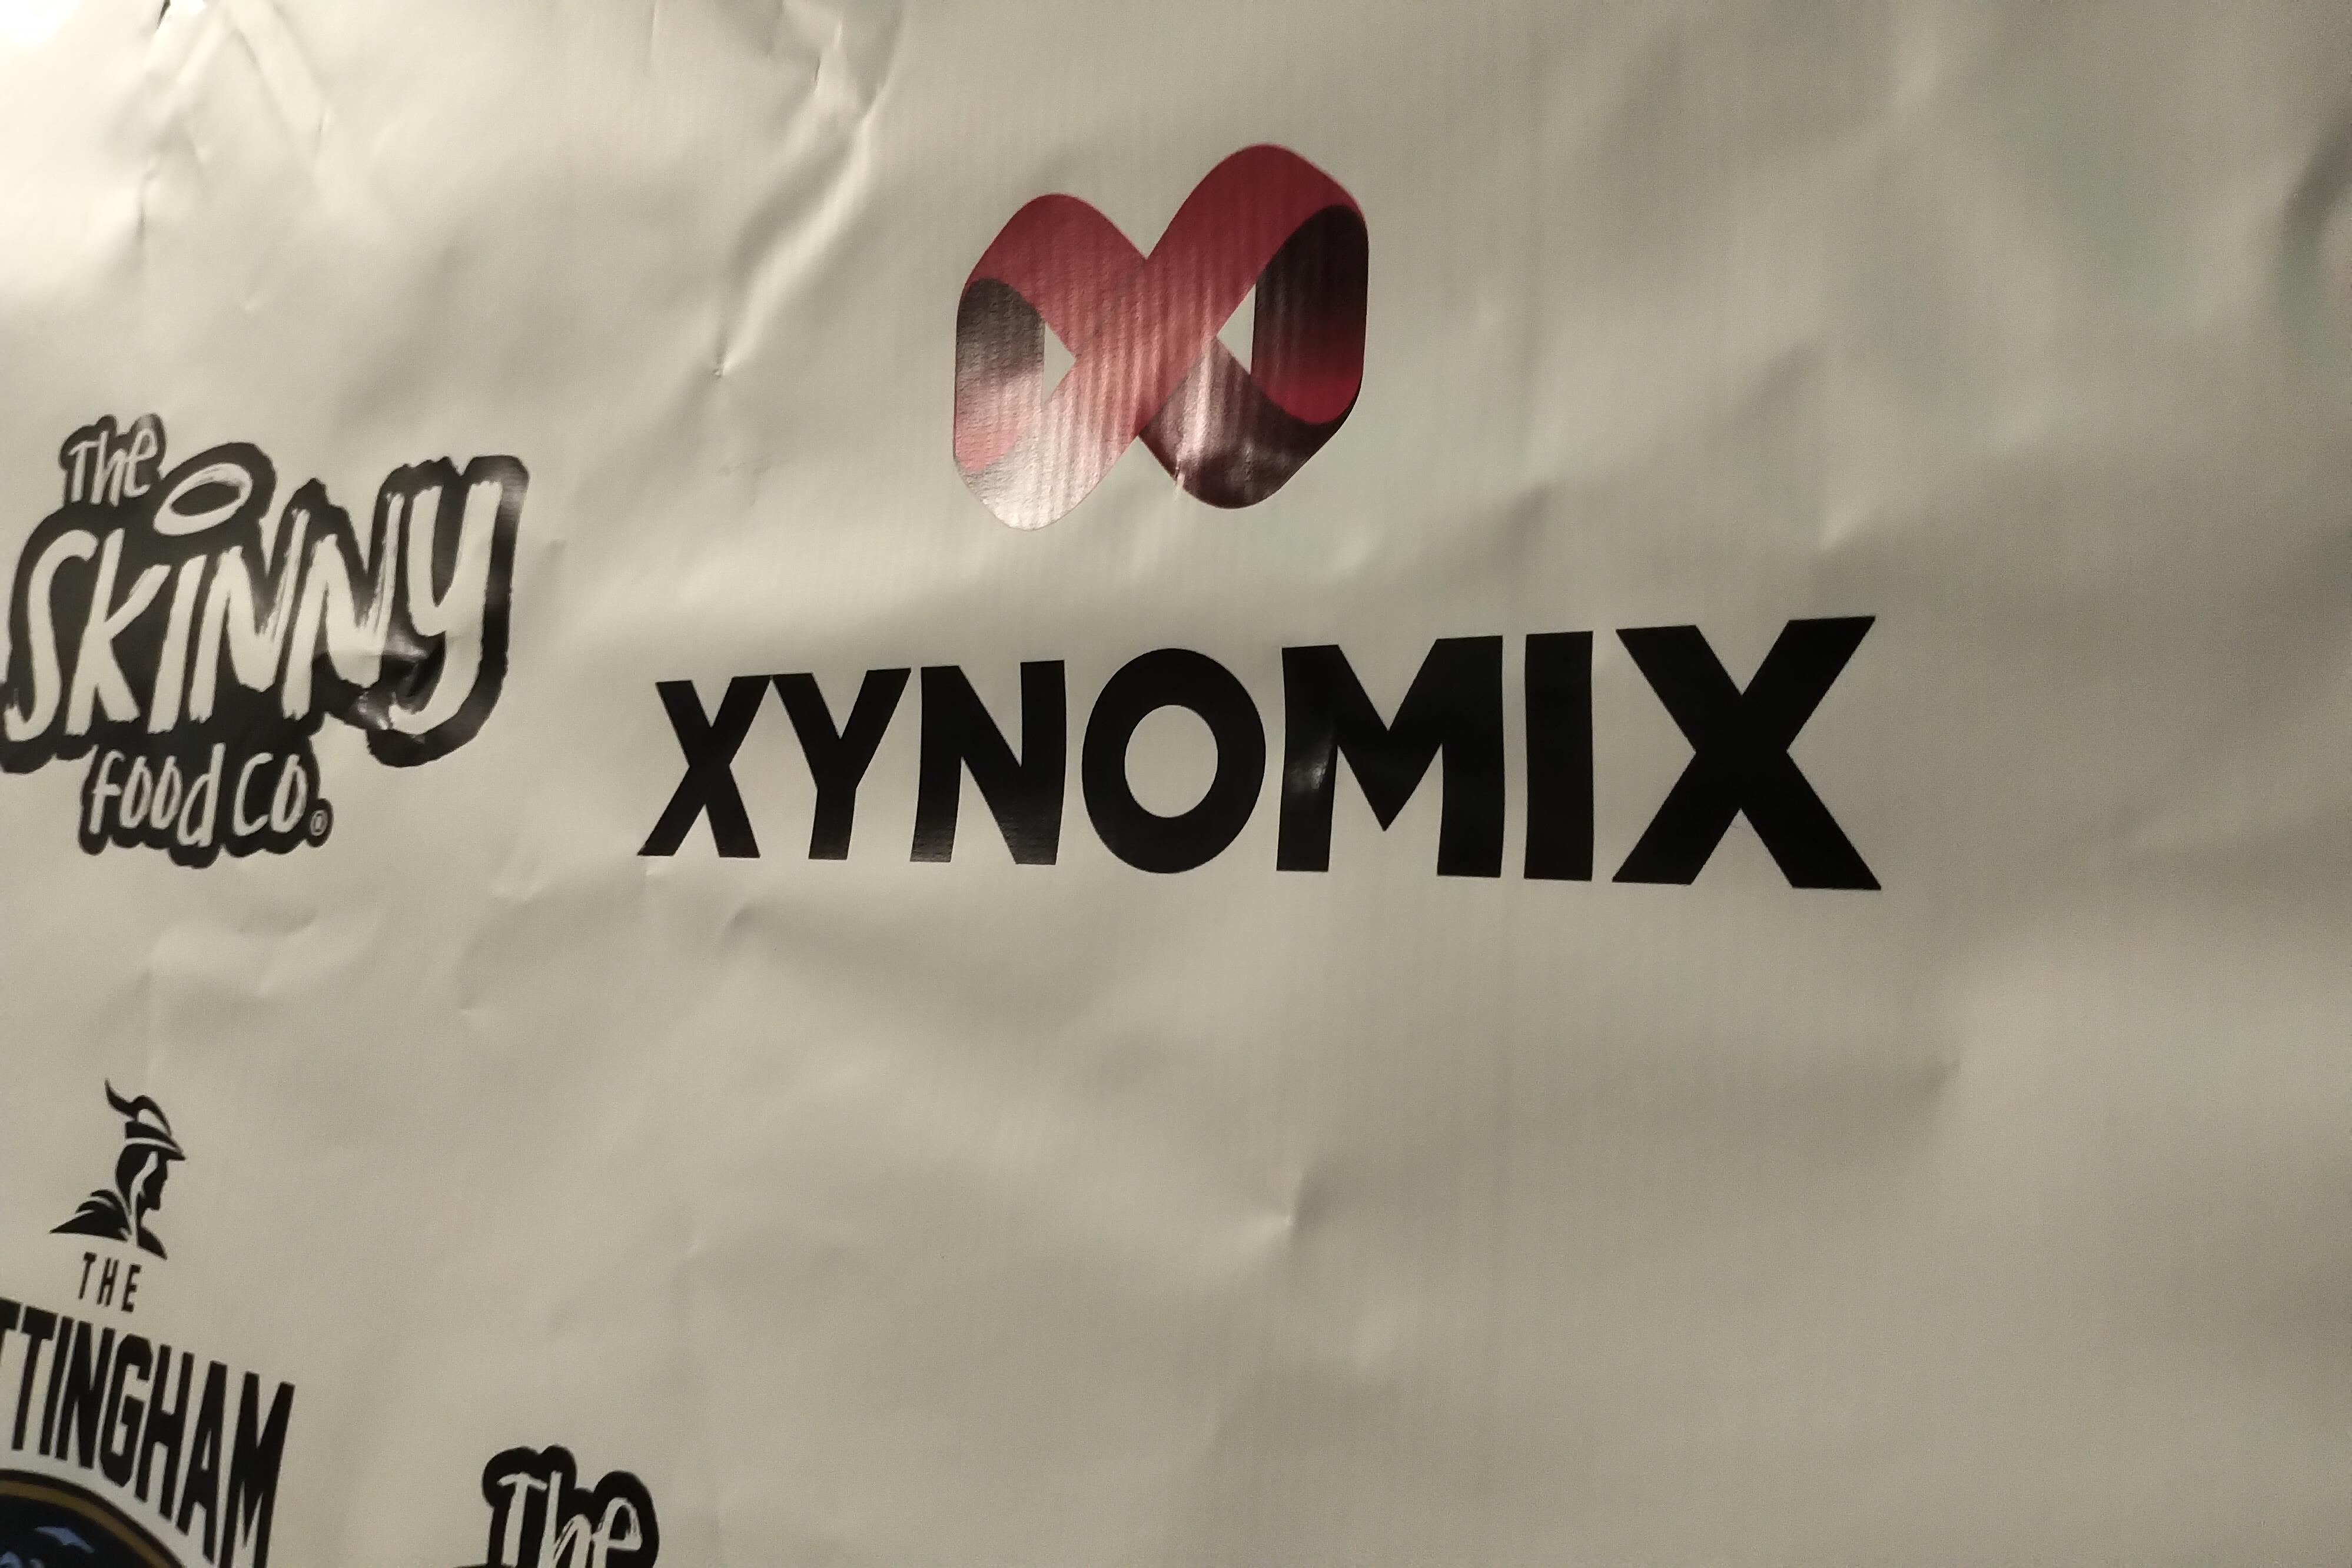 XYNOMIX SPONSOR PANTHERS RADIO AGAIN Top Image